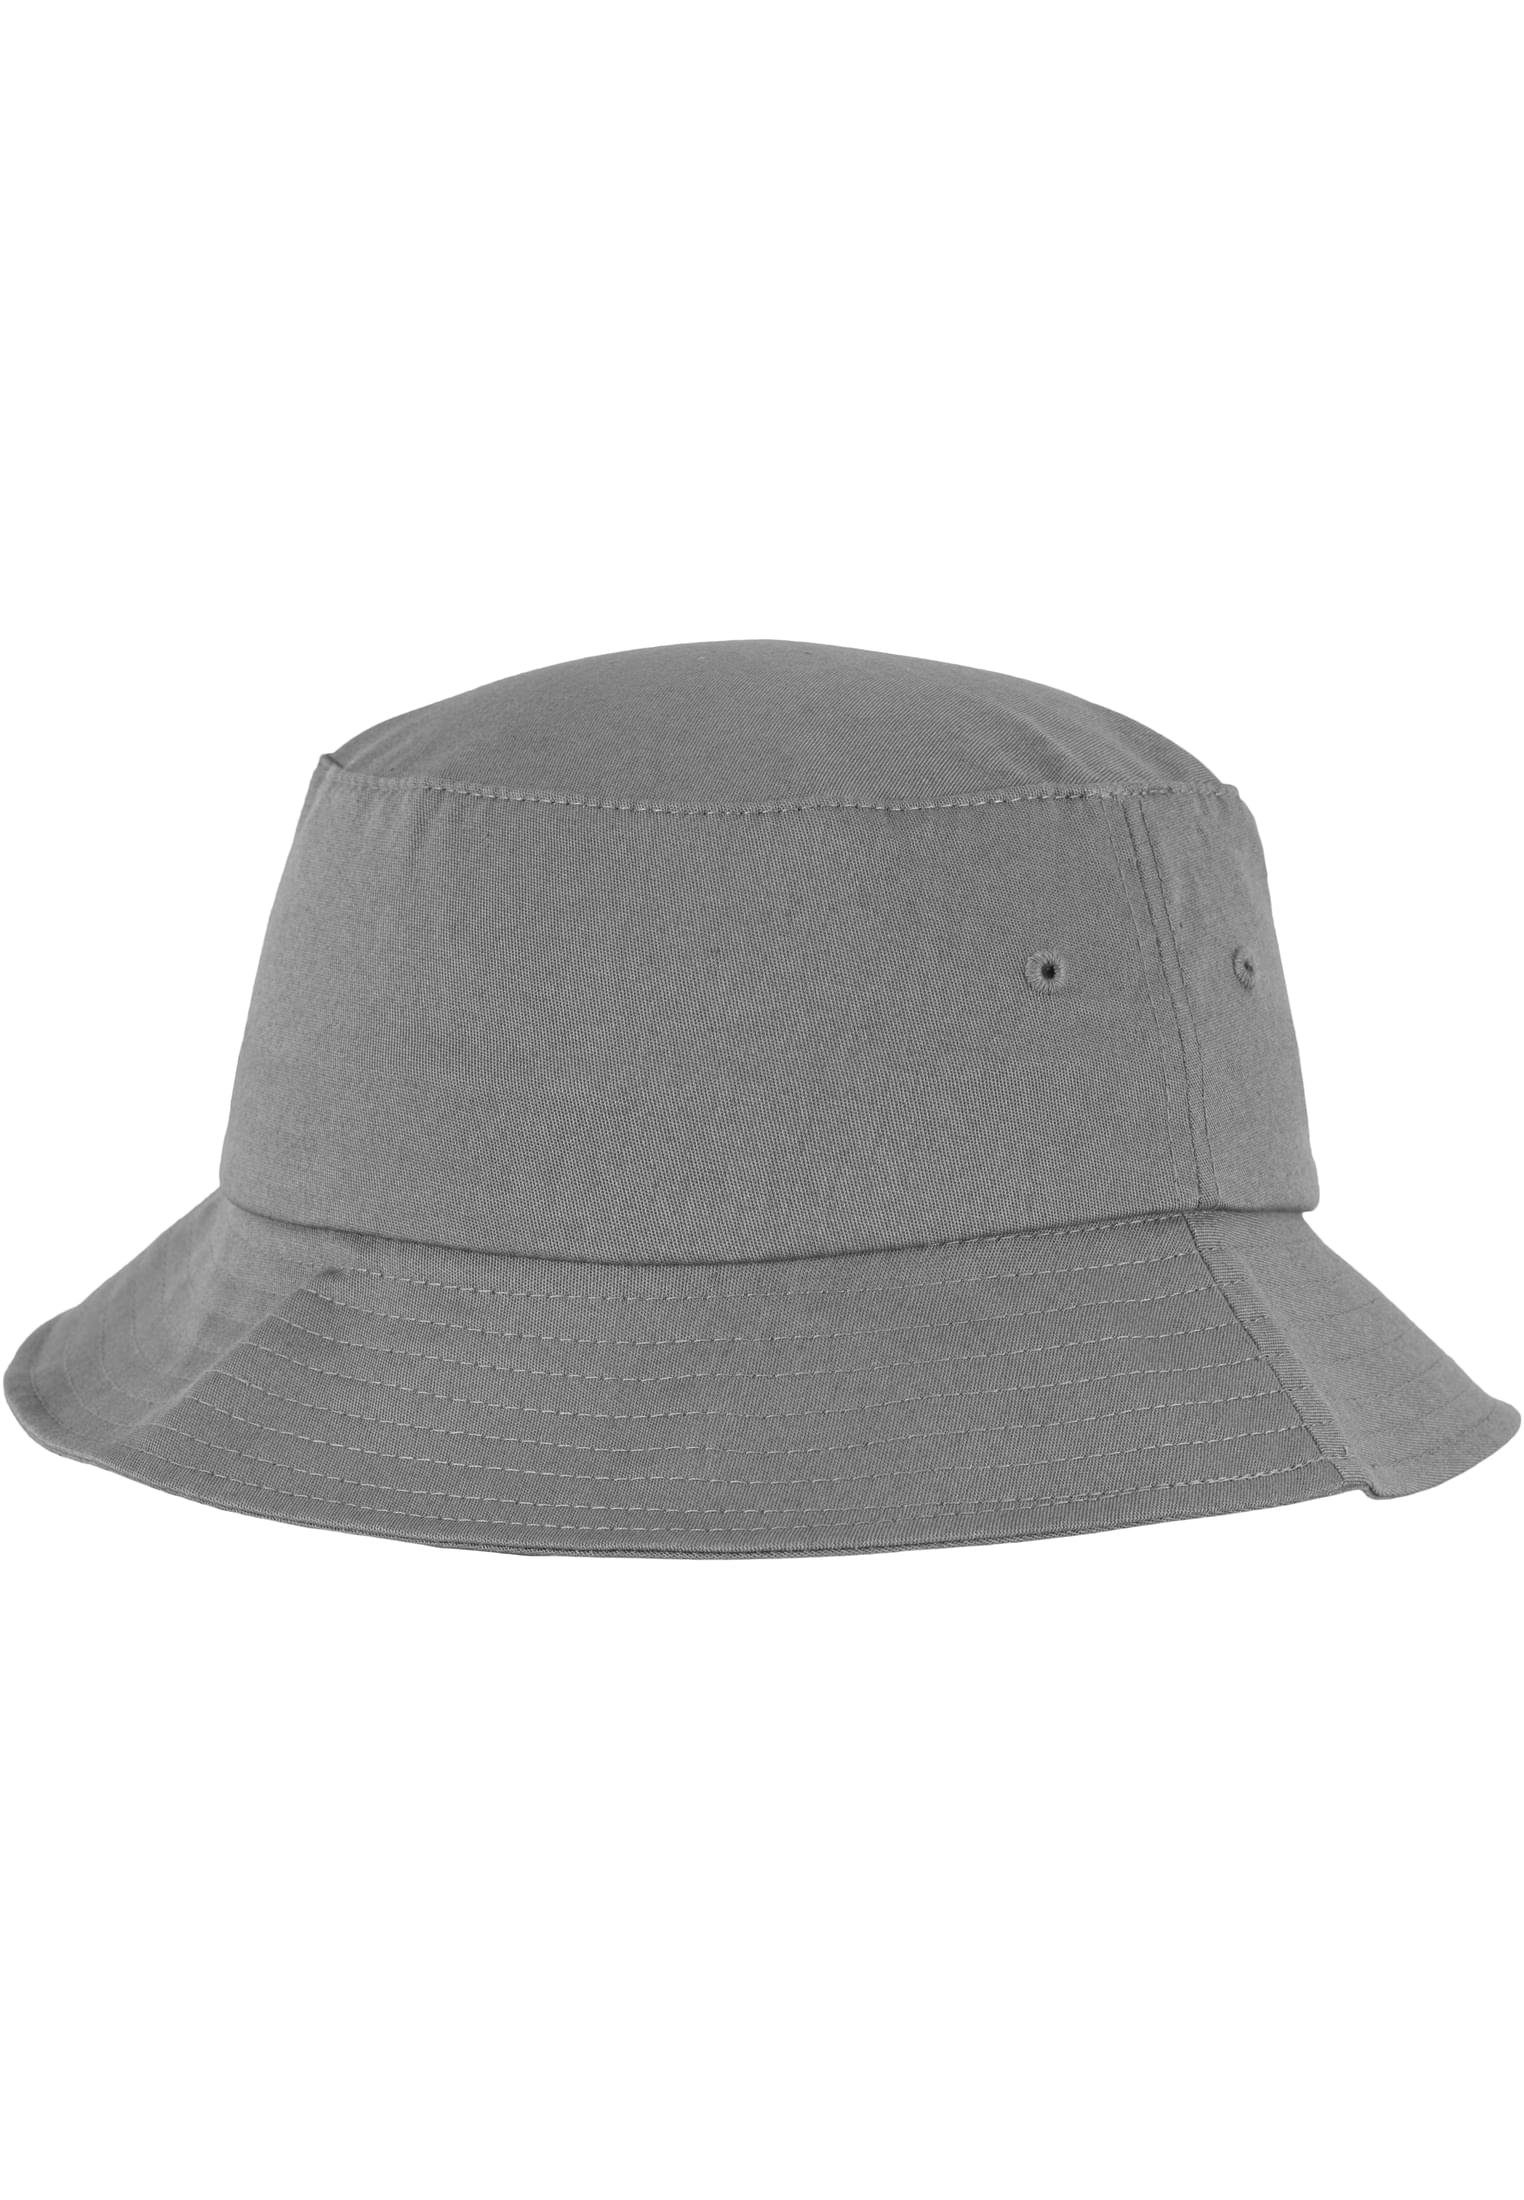 Flexfit Flex Cap Accessoires Flexfit Twill Bucket Cotton grey Hat